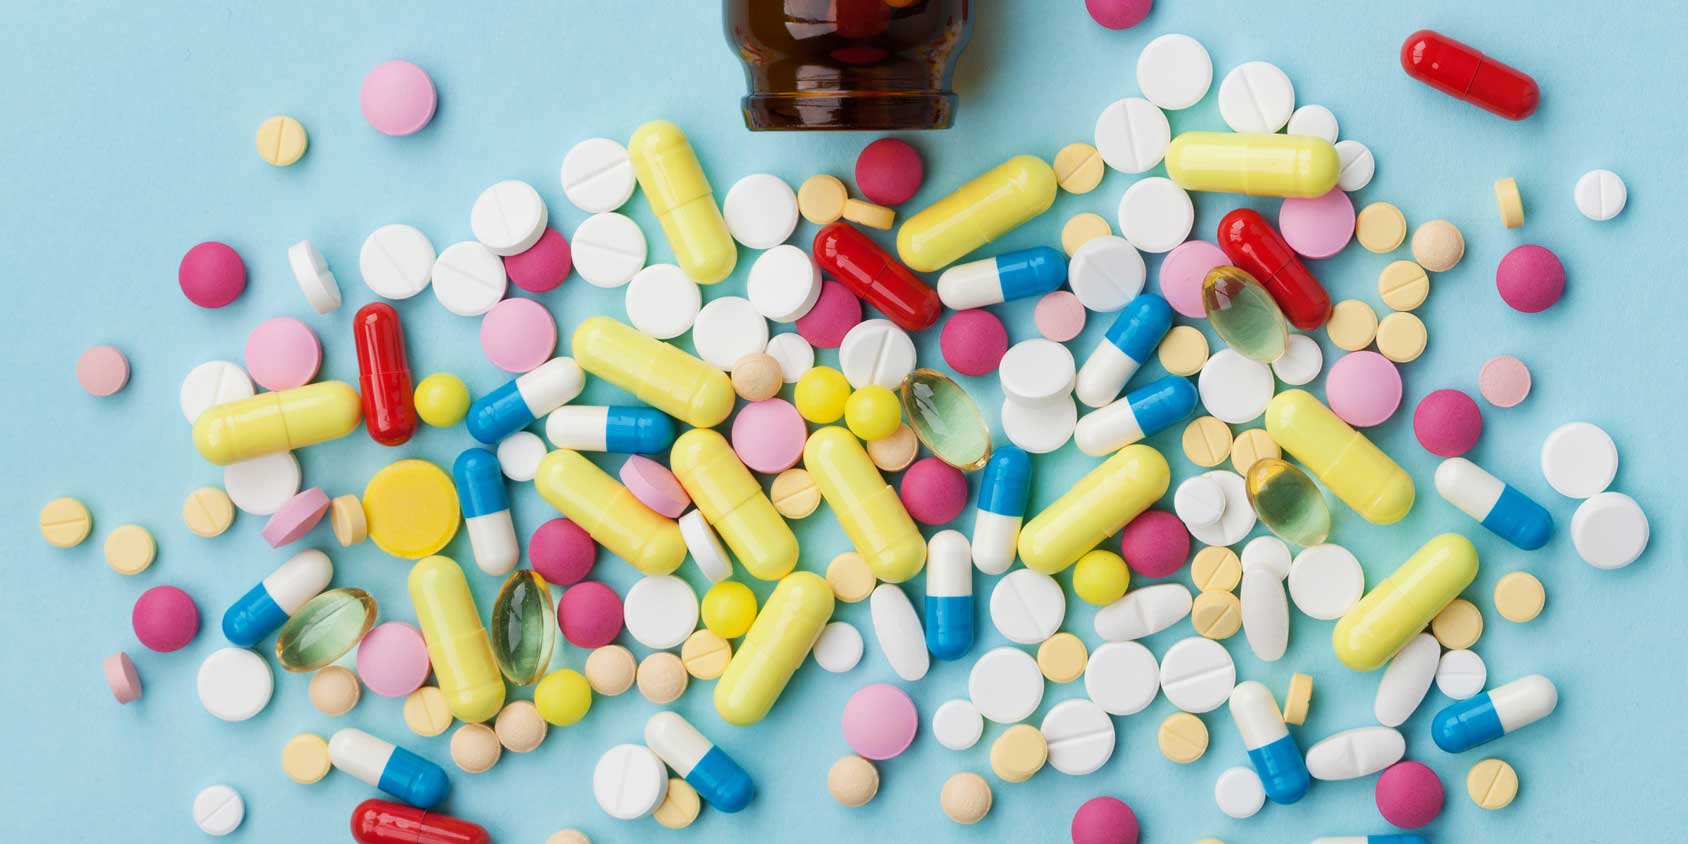 FDA Allows Carcinogens In Popular Drugs